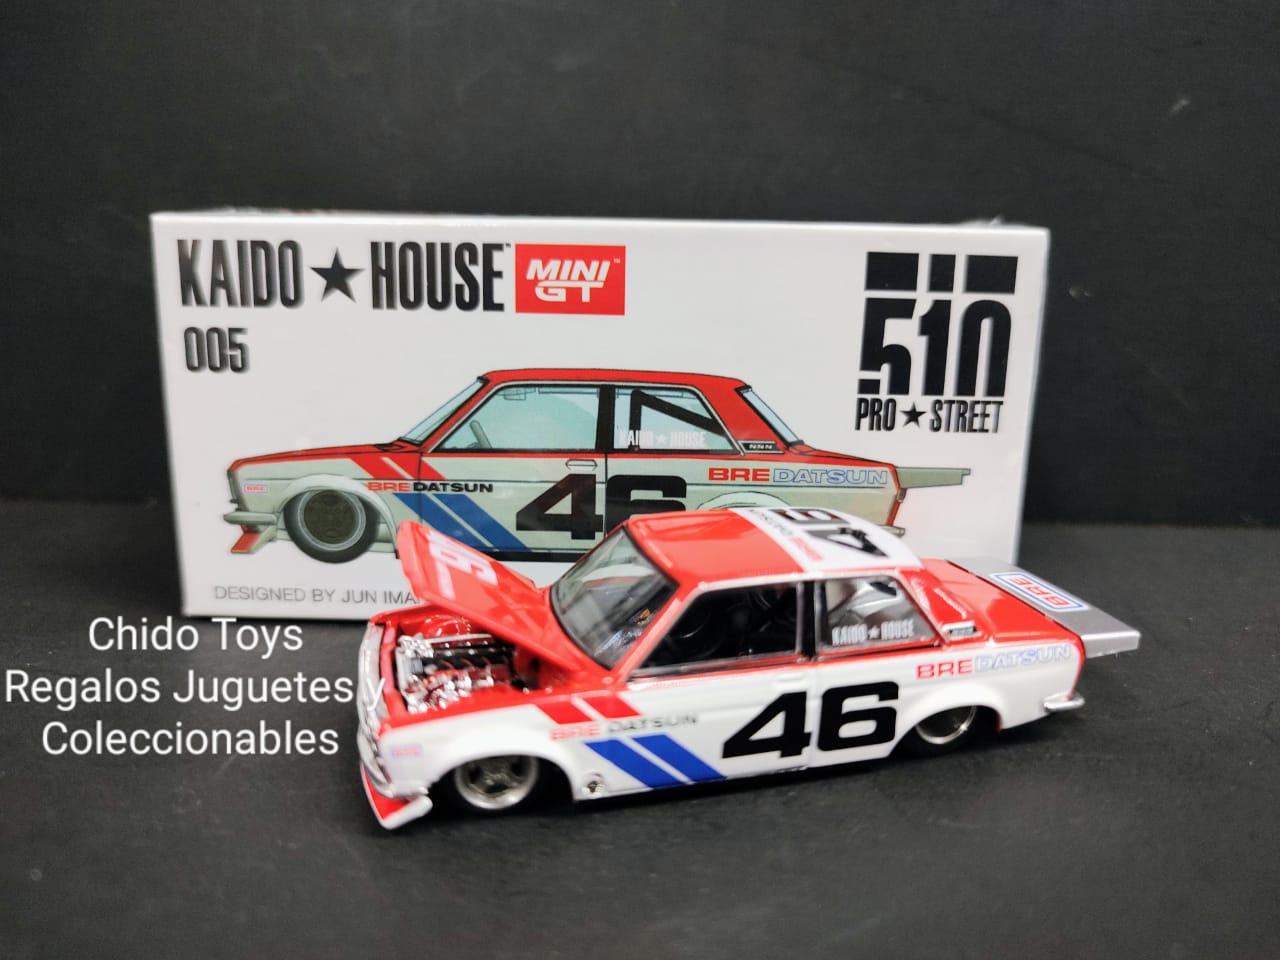 Auto a escala marca Kaido - House Mini GT, modelo Datsun 510 Pro Street, edad 14+ - Chido Toys